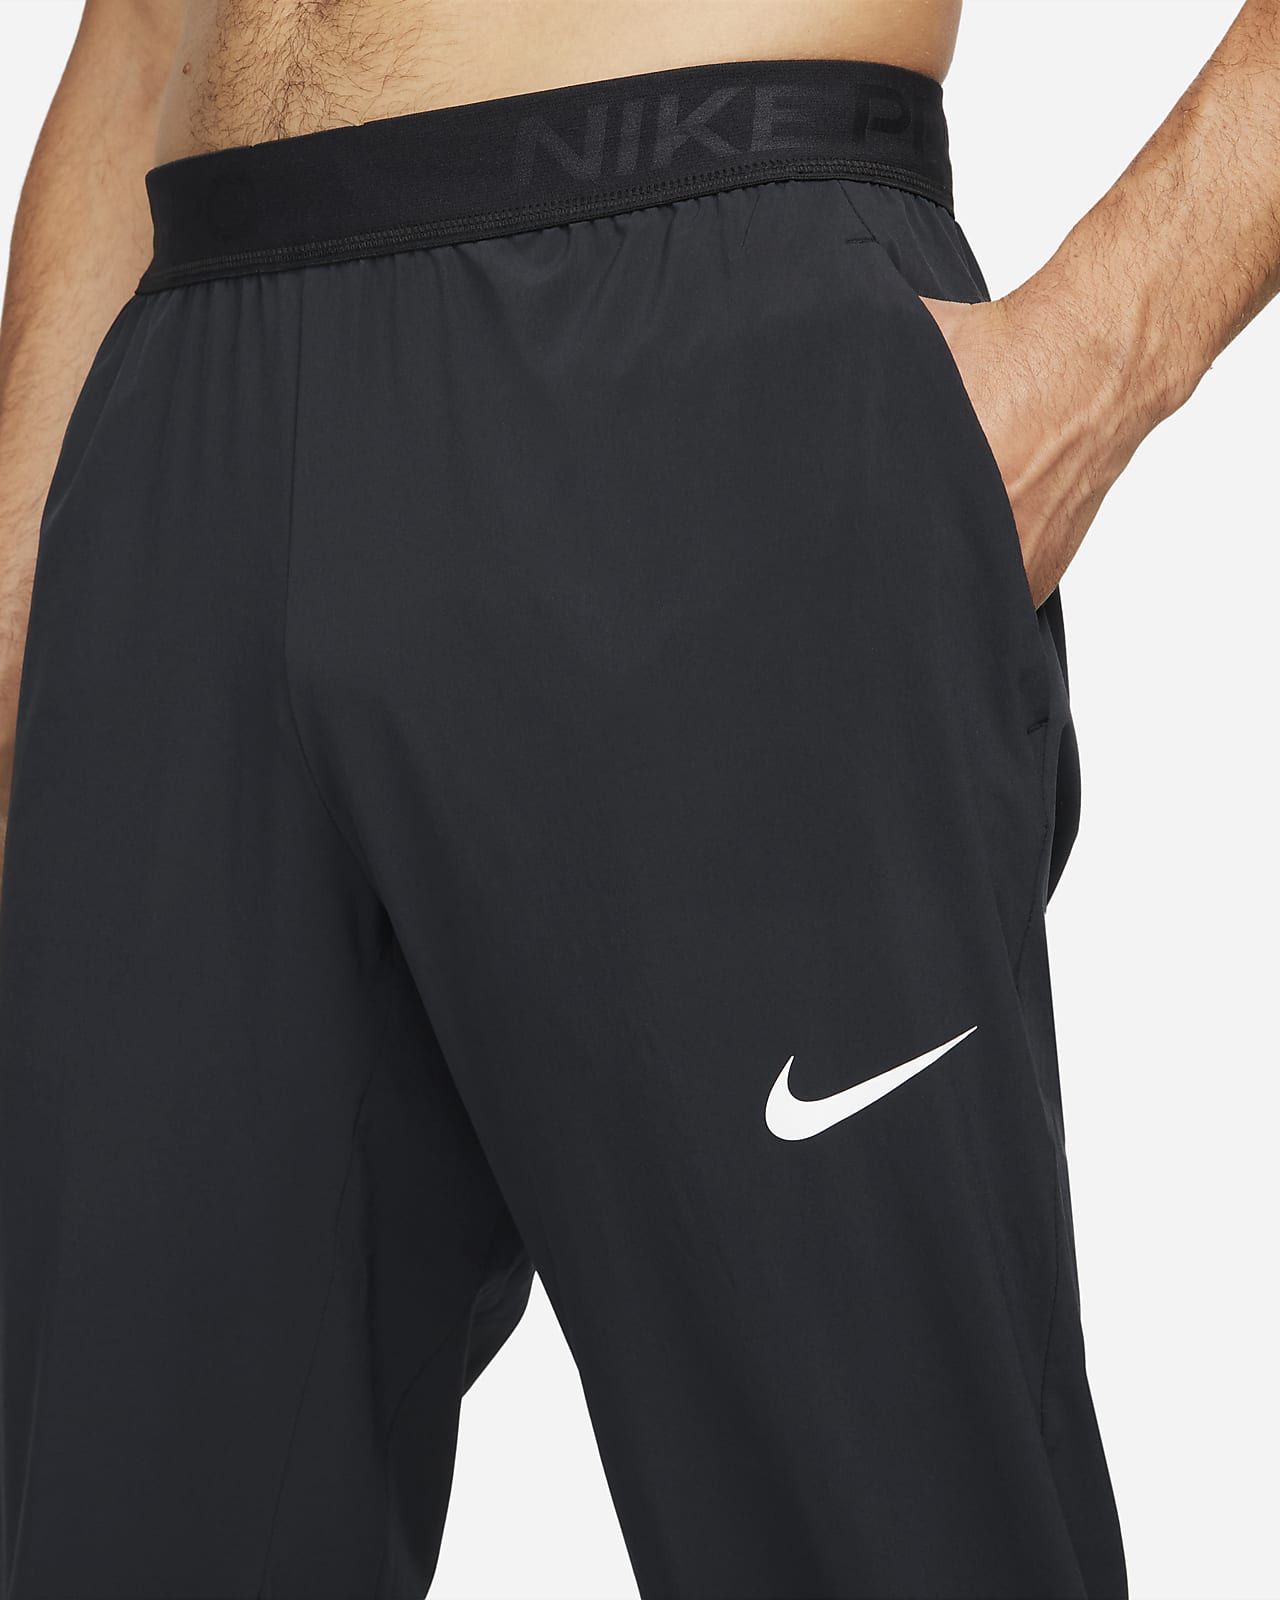 Nike Pro Cool Legendary Training Pant